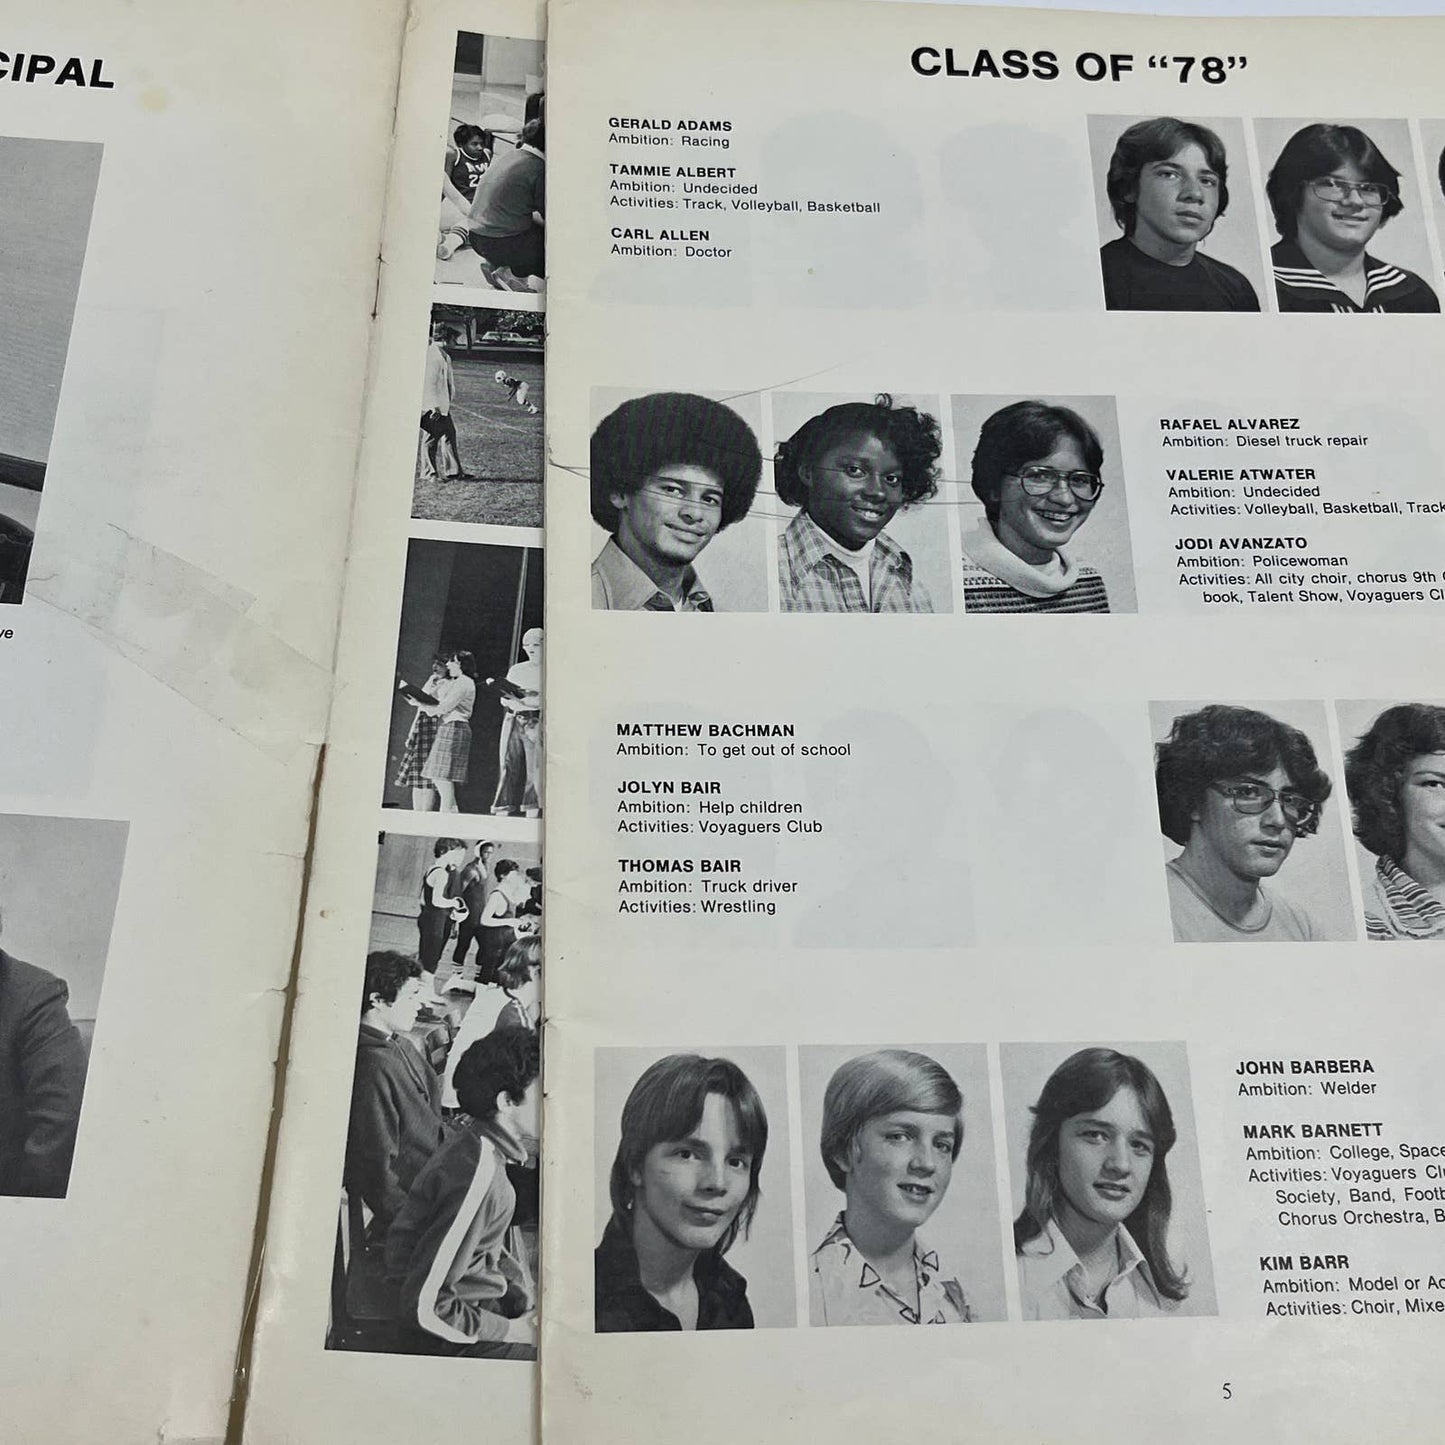 1978 Northwest Junior High School Yearbook Reading PA TG2